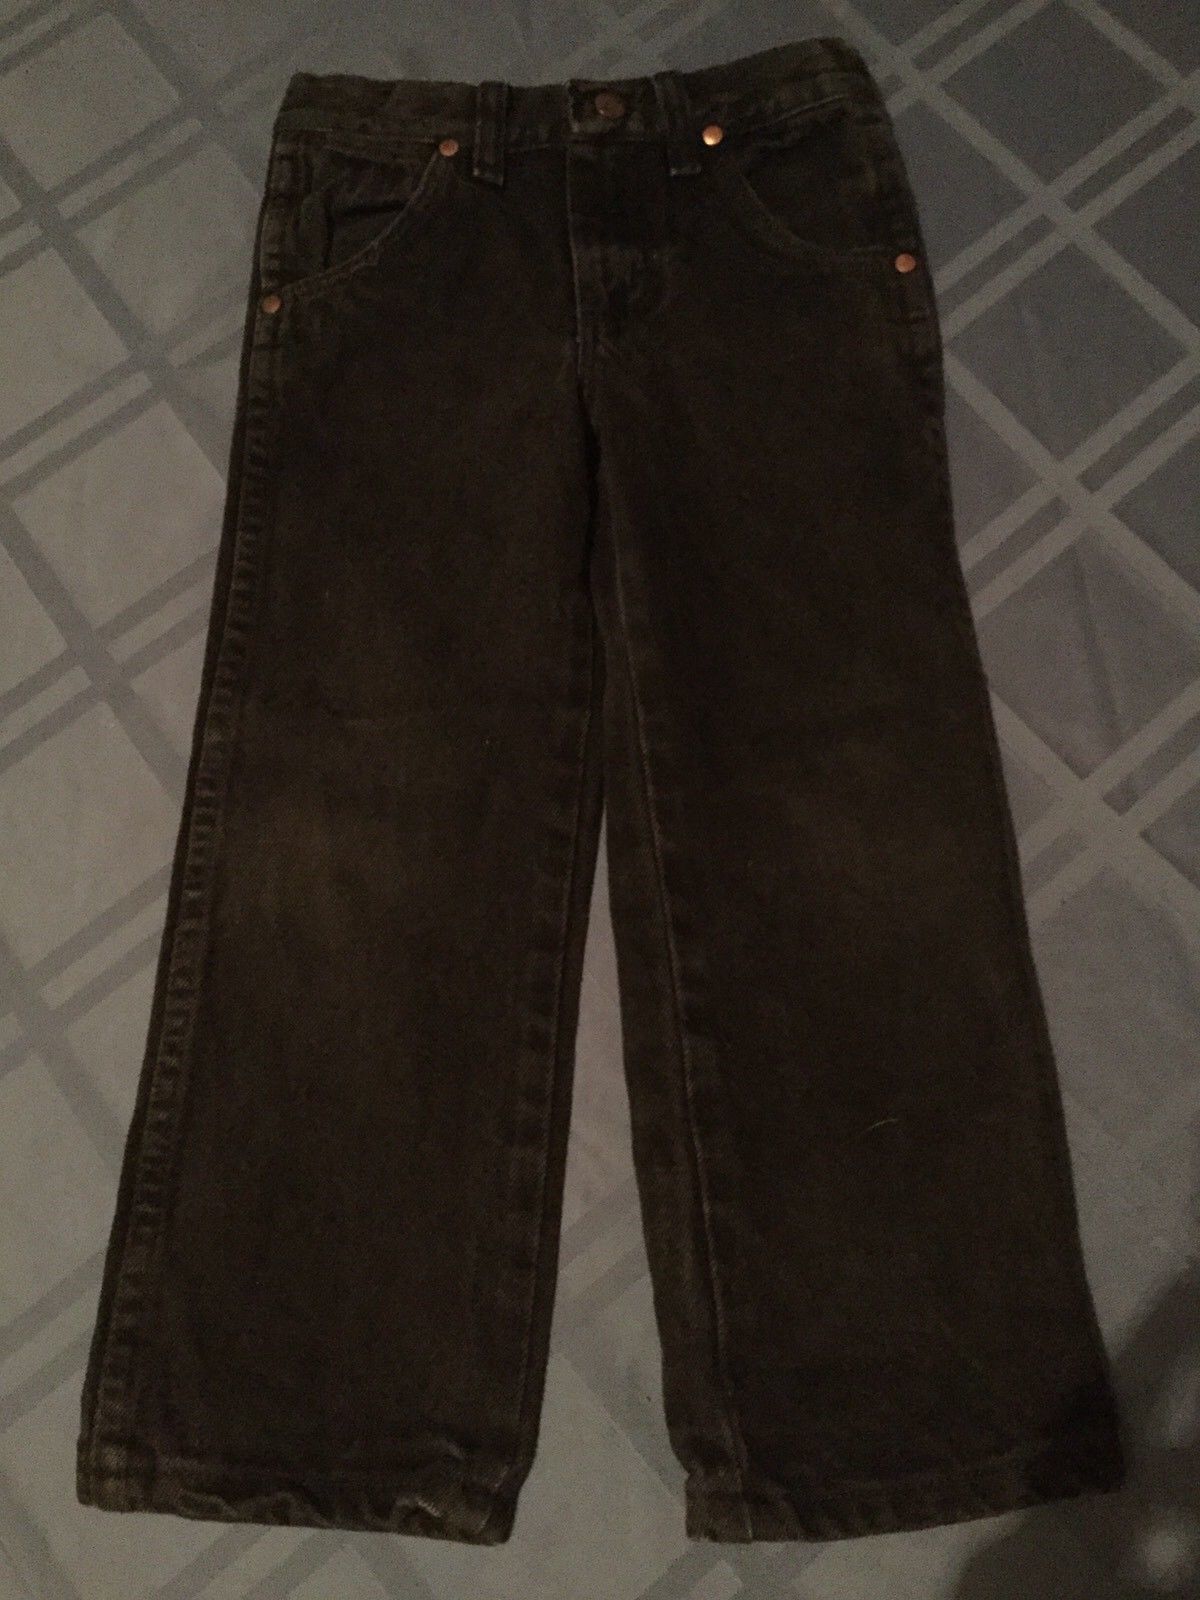 Wrangler jeans vintage classic Boys Size 4 Reg. black denim jeans western rodeo - £10.99 GBP